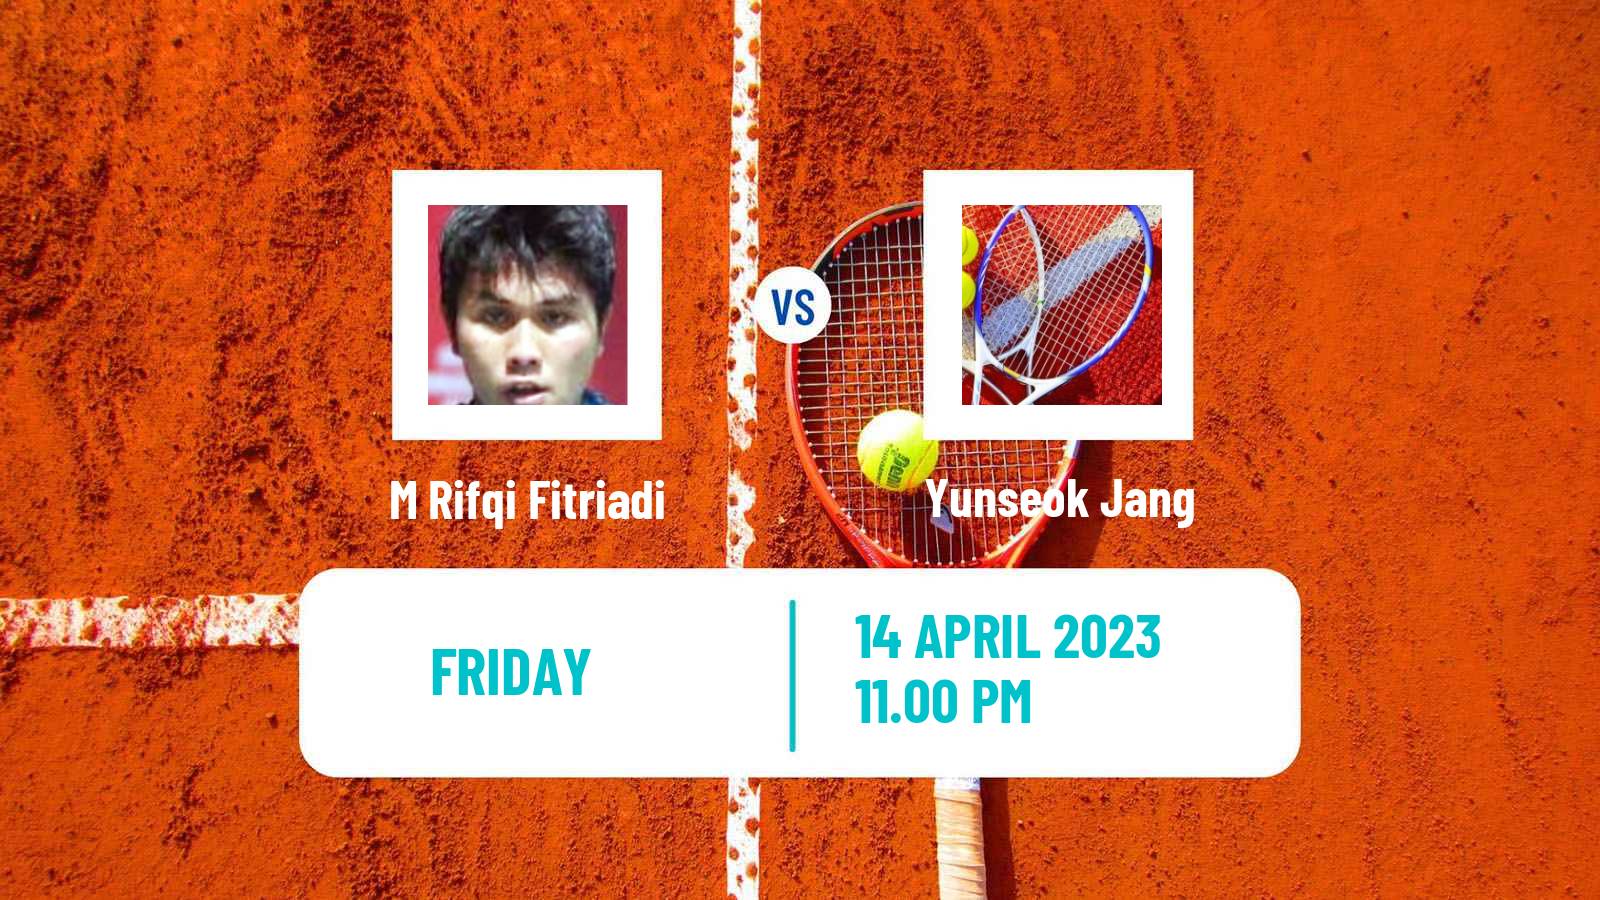 Tennis ITF Tournaments M Rifqi Fitriadi - Yunseok Jang